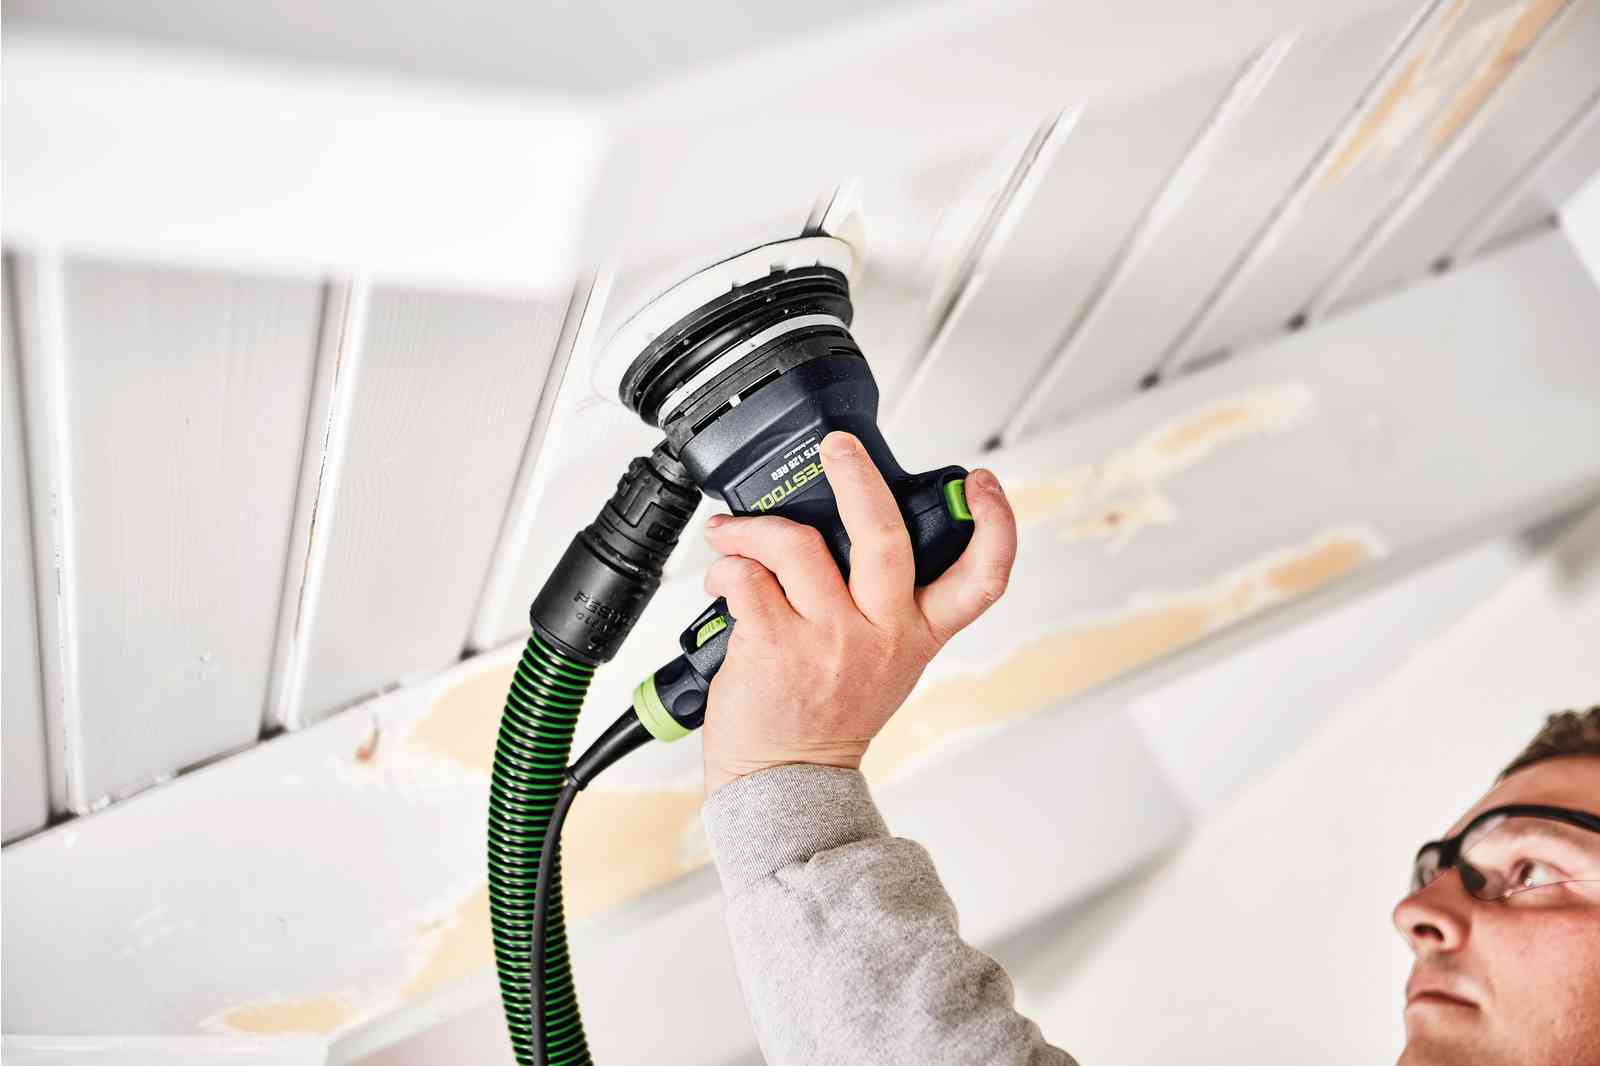 Festool Power Tools for Paint & Drywall